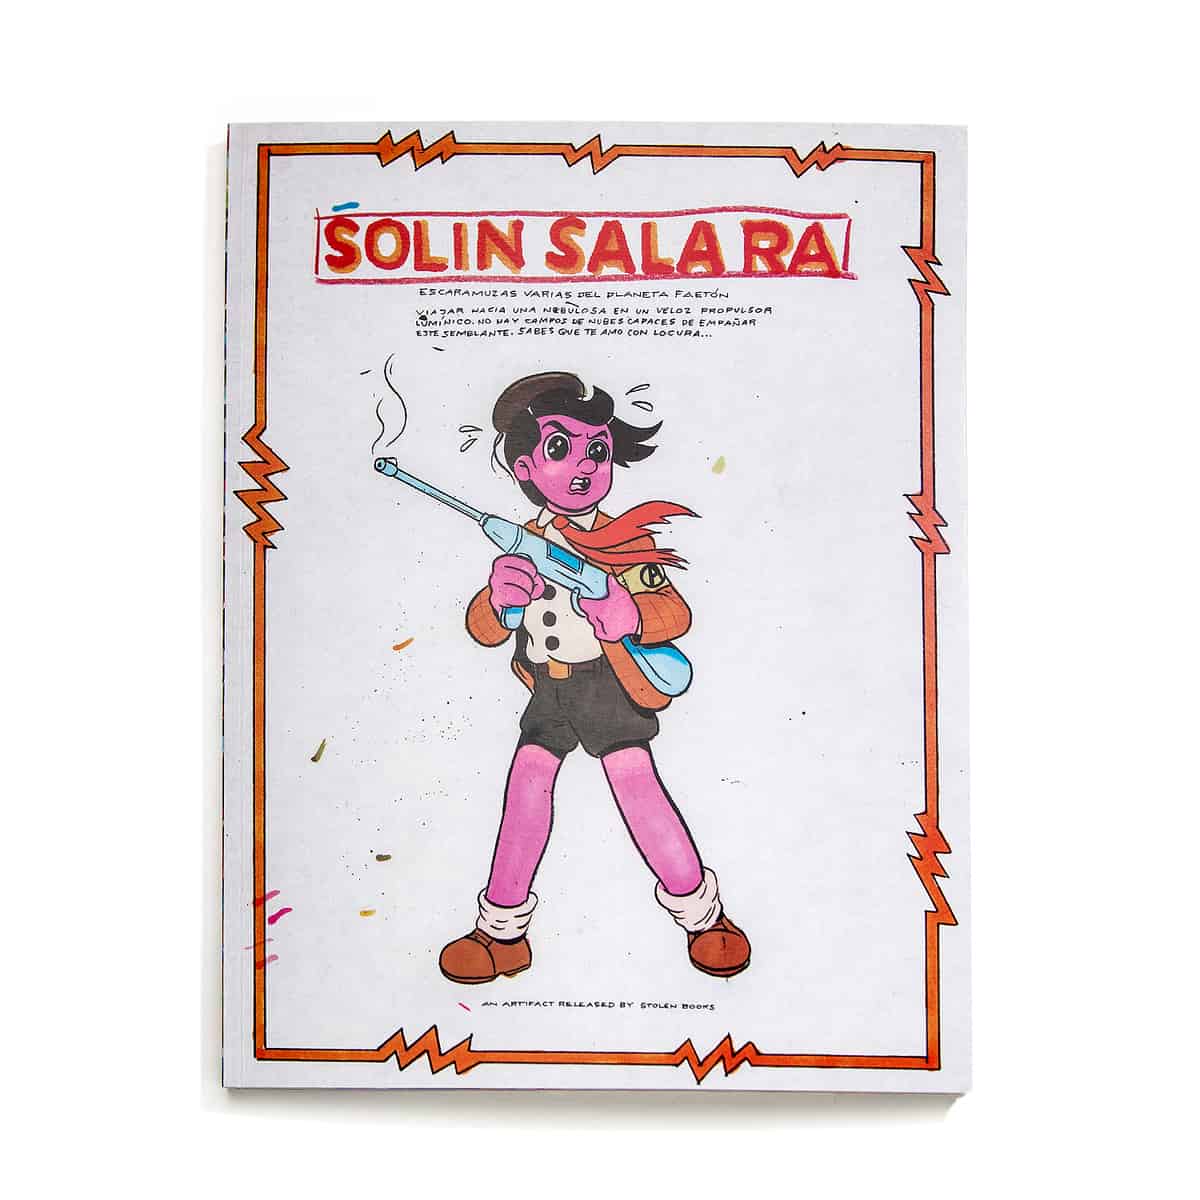 Solin Sala Ra